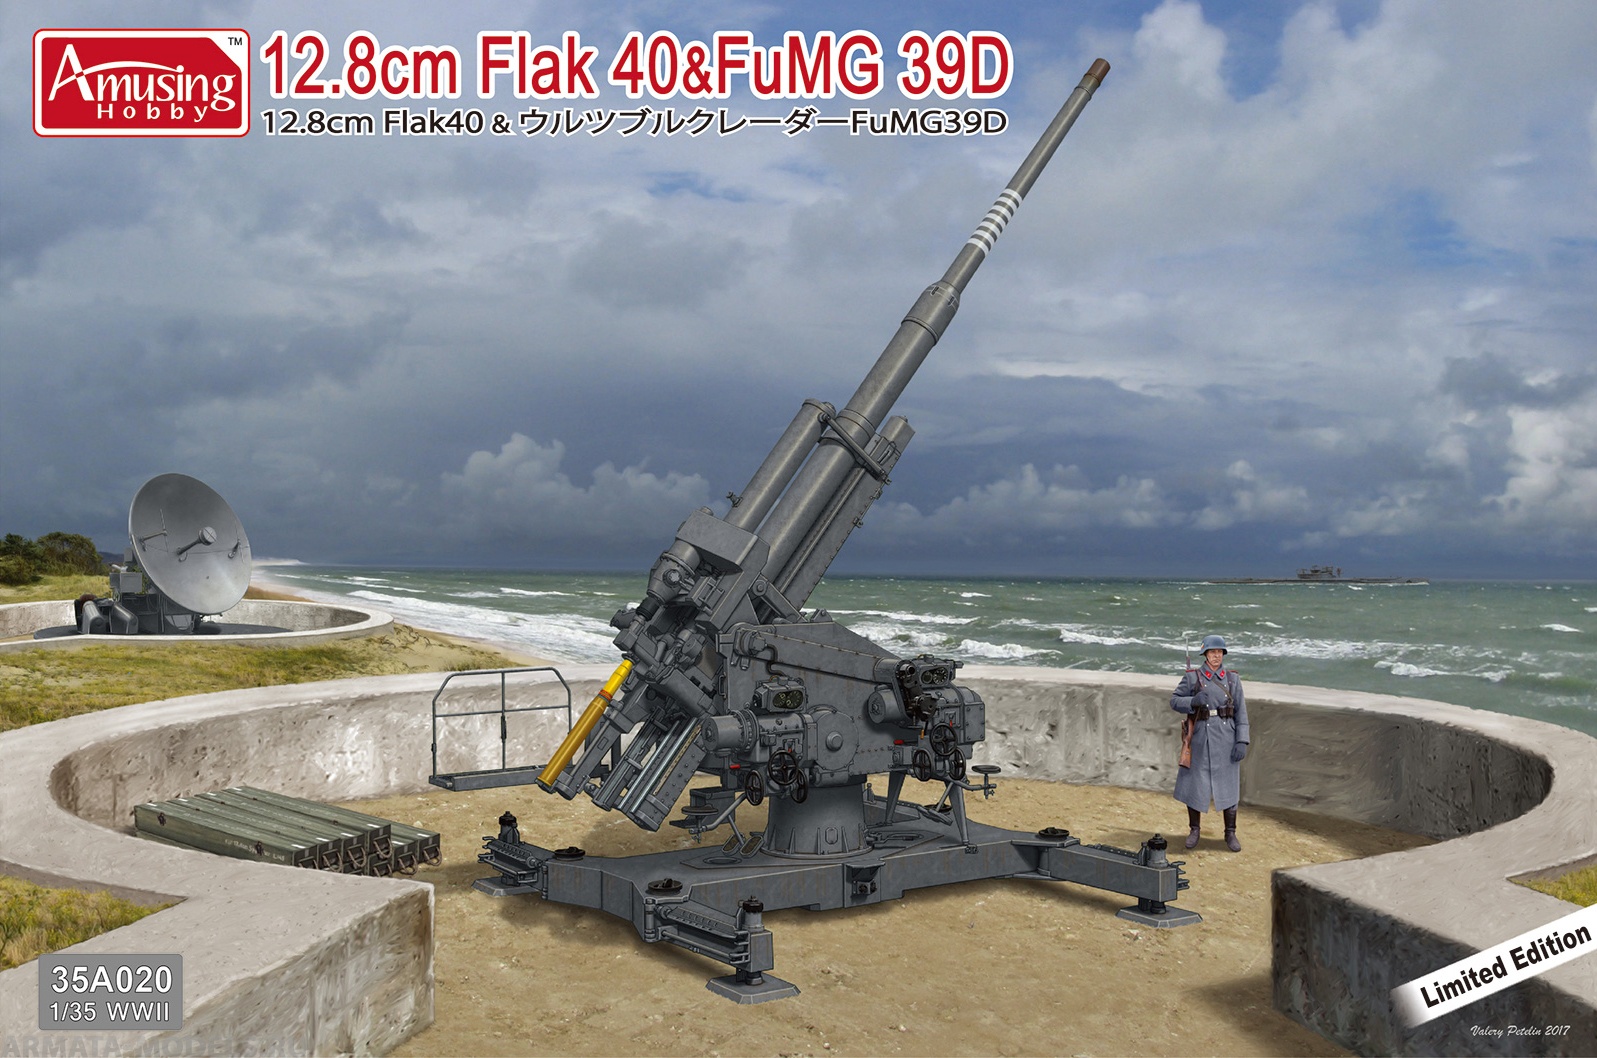 12 мм пушка. 12.8 Cm Flak 40. 128 Мм зенитное орудие Flak 40. 128 Мм зенитное орудие Flak 40 Zwilling. Flak 40 орудие.